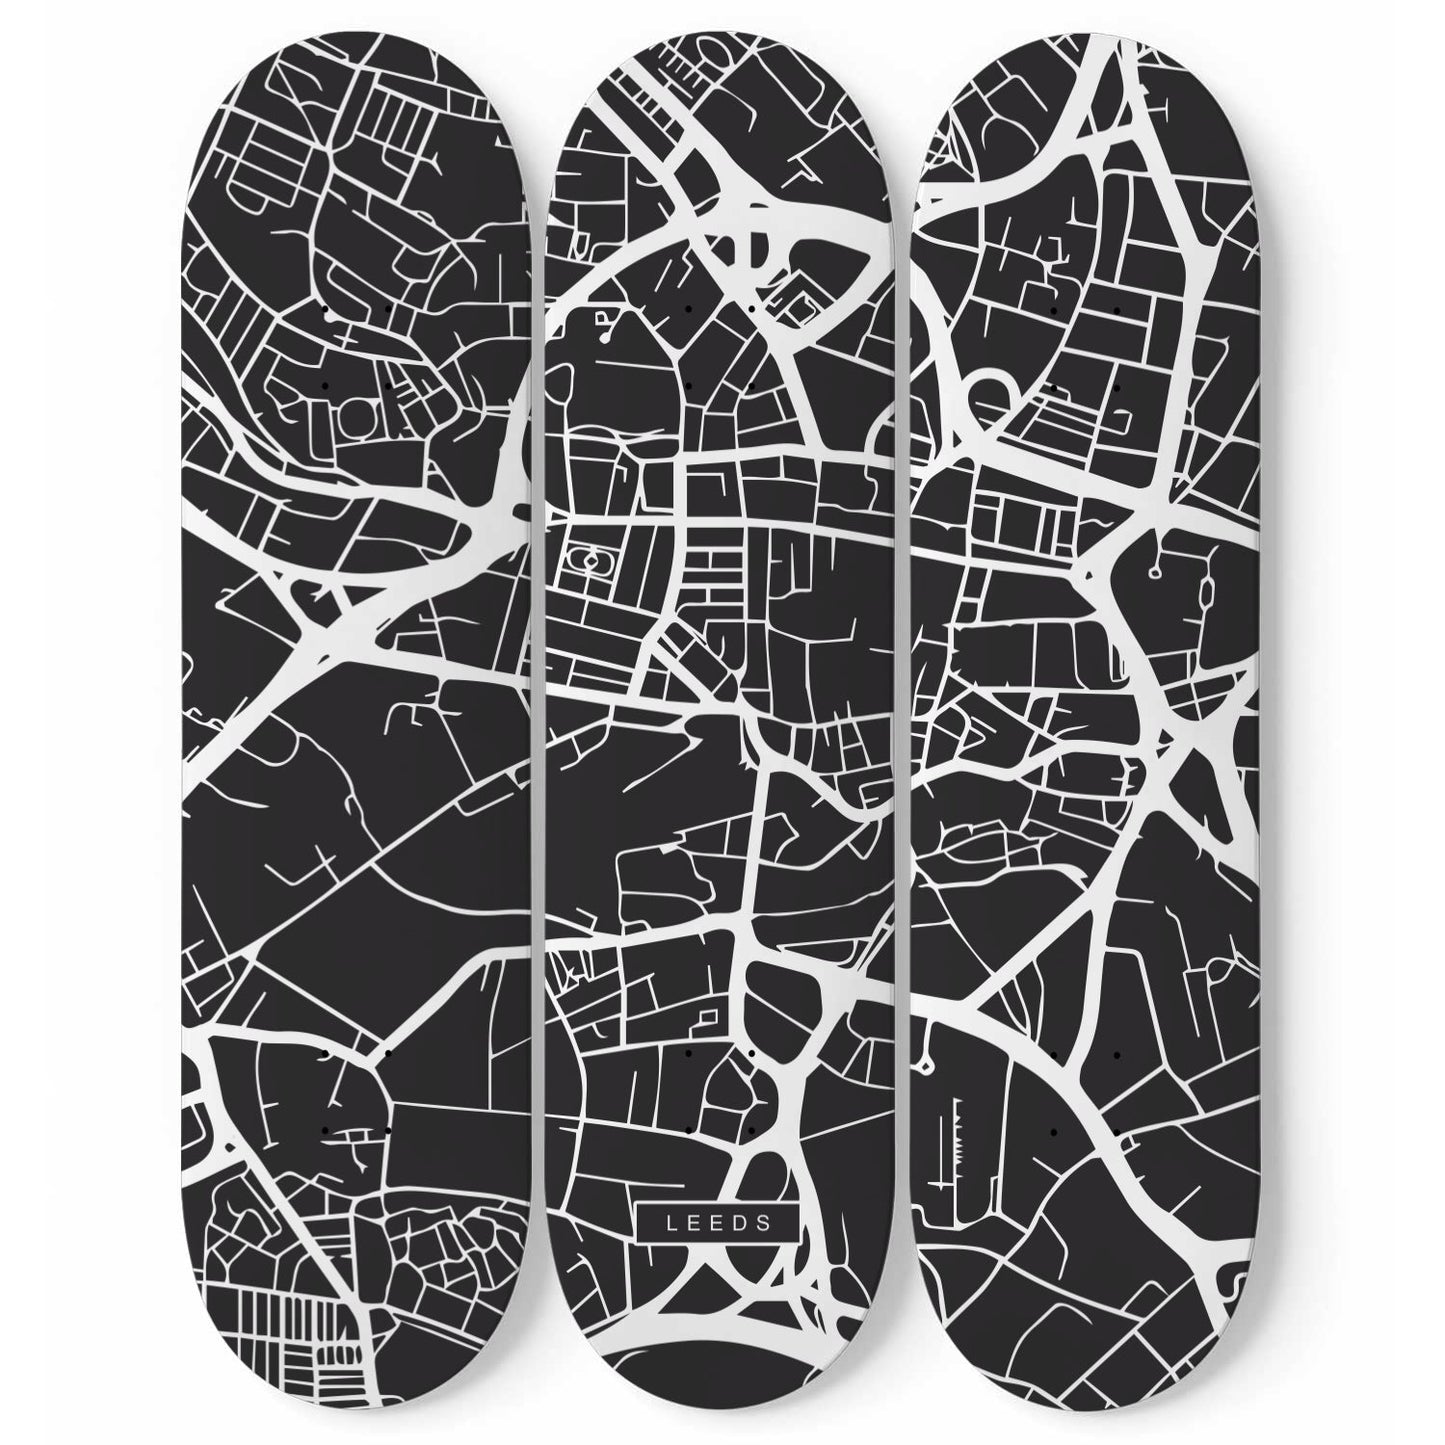 City Maps Leeds (UK) - Skater Wall